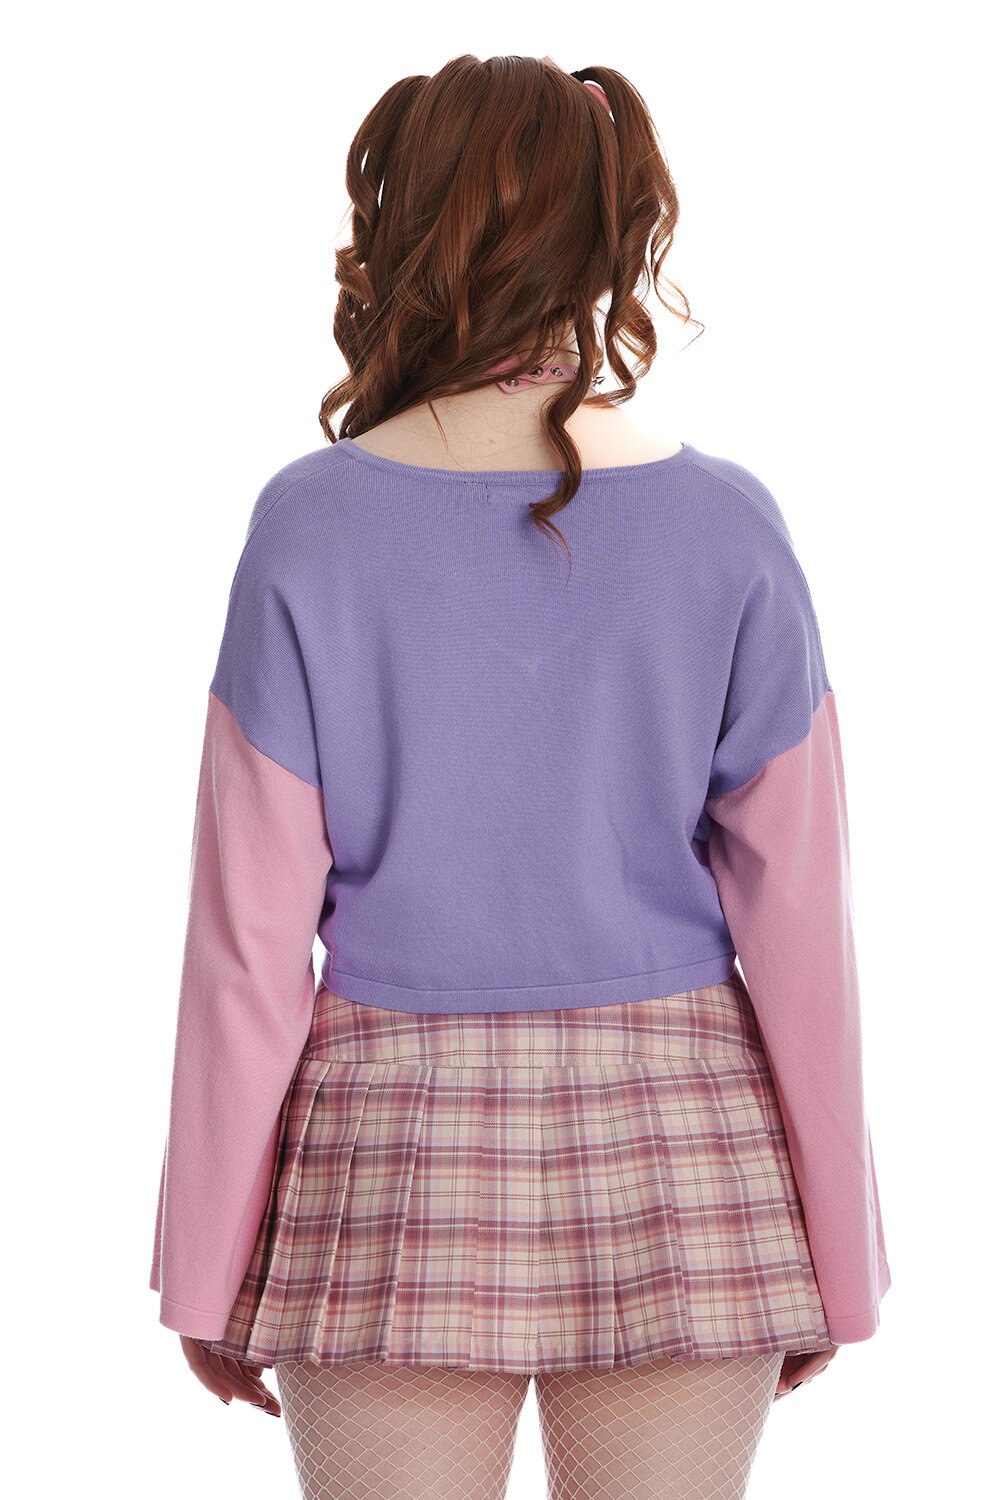 Pastel heart crop sweater